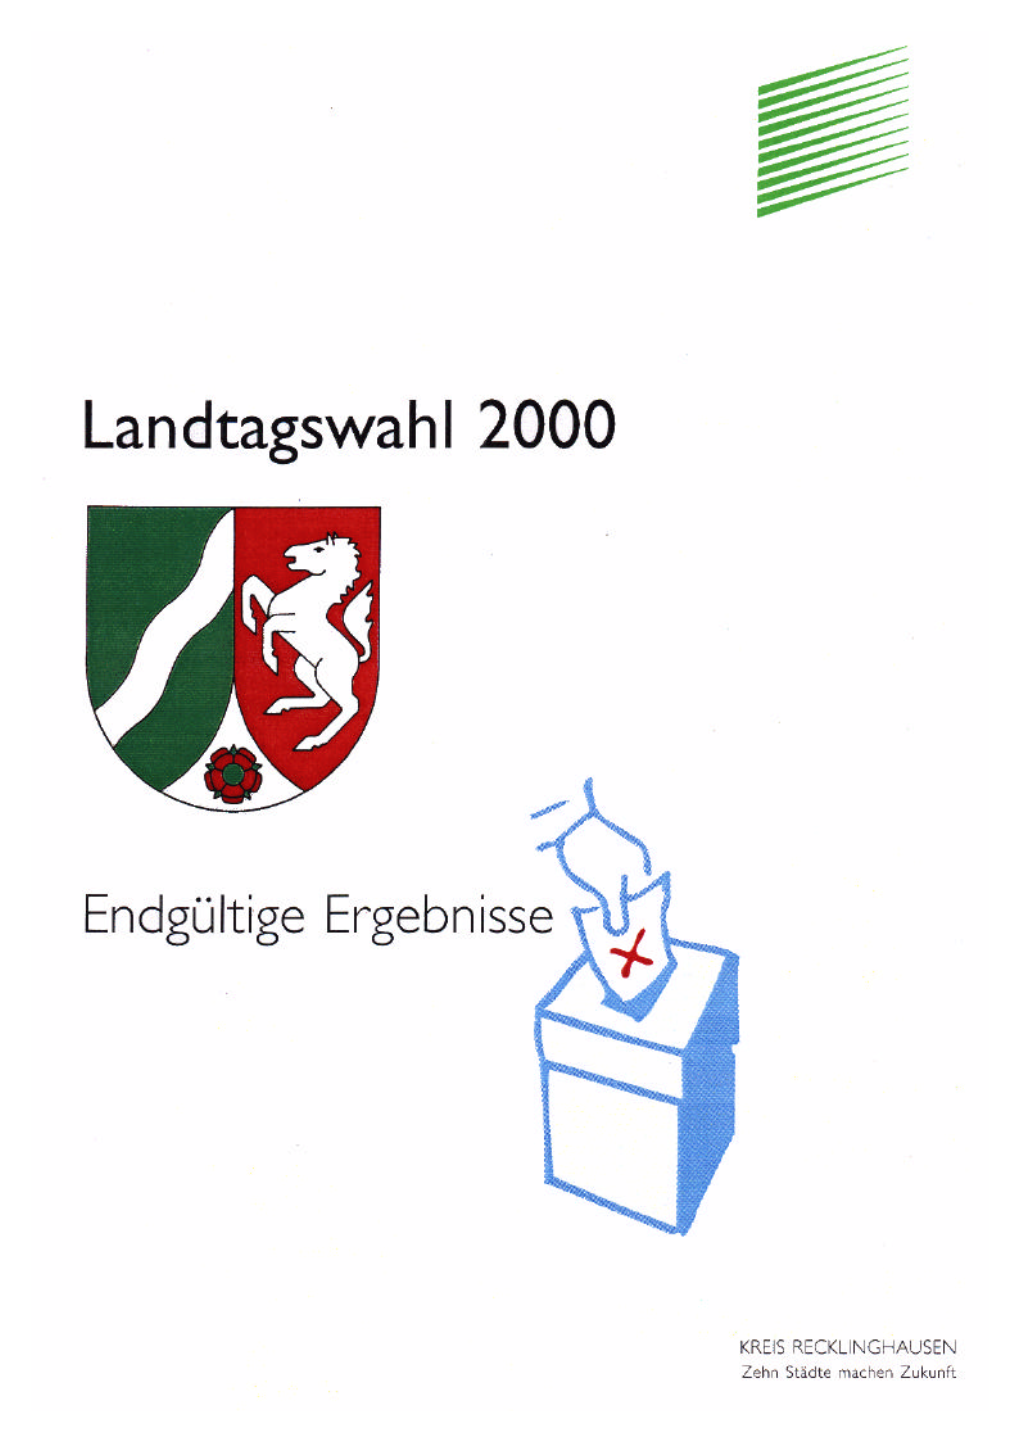 Landtagswahl 2000 Im Kreis Recklinghausen